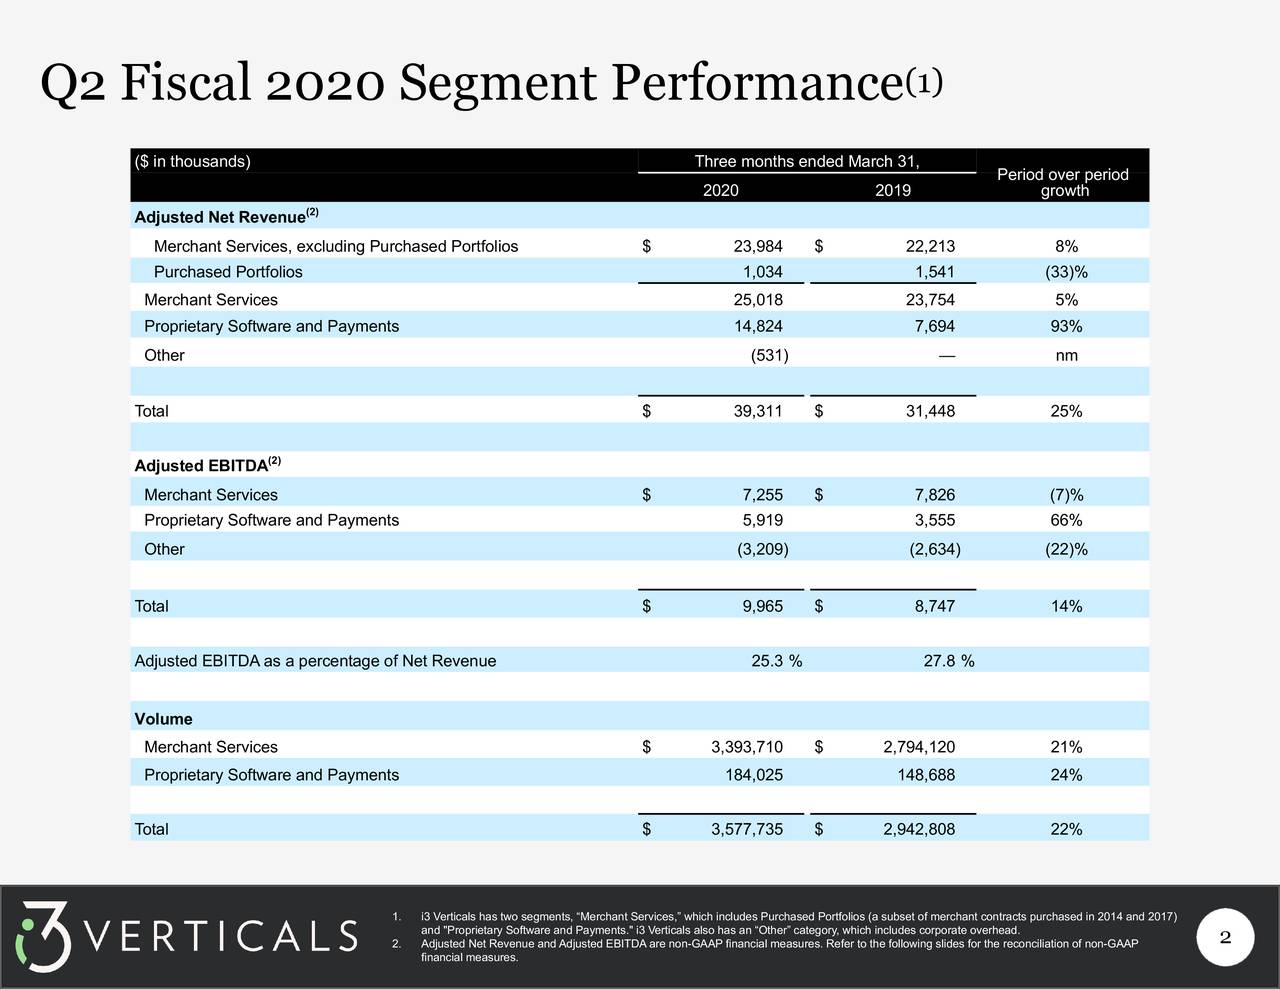 Q2 Fiscal 2020 Segment Performance                                                                       (1)